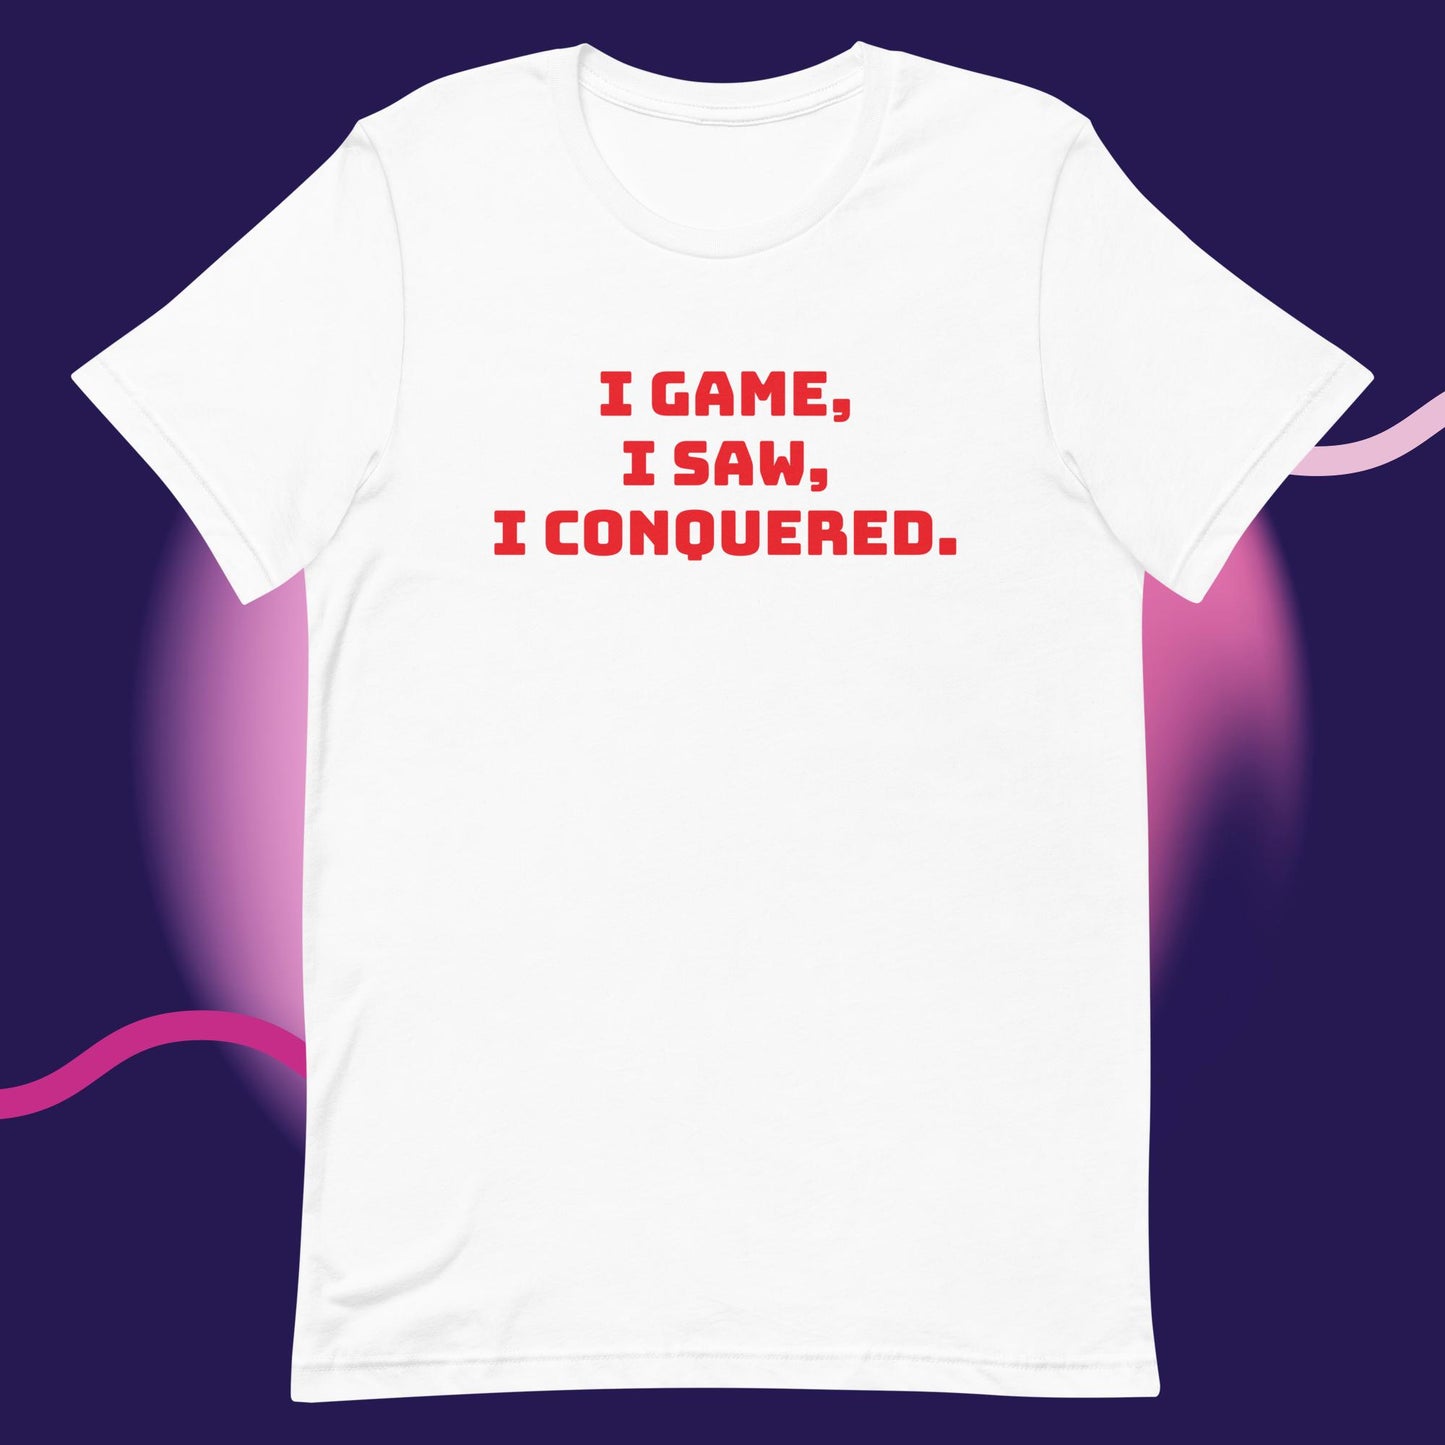 I game, I saw, I conquered. Unisex t-shirt.